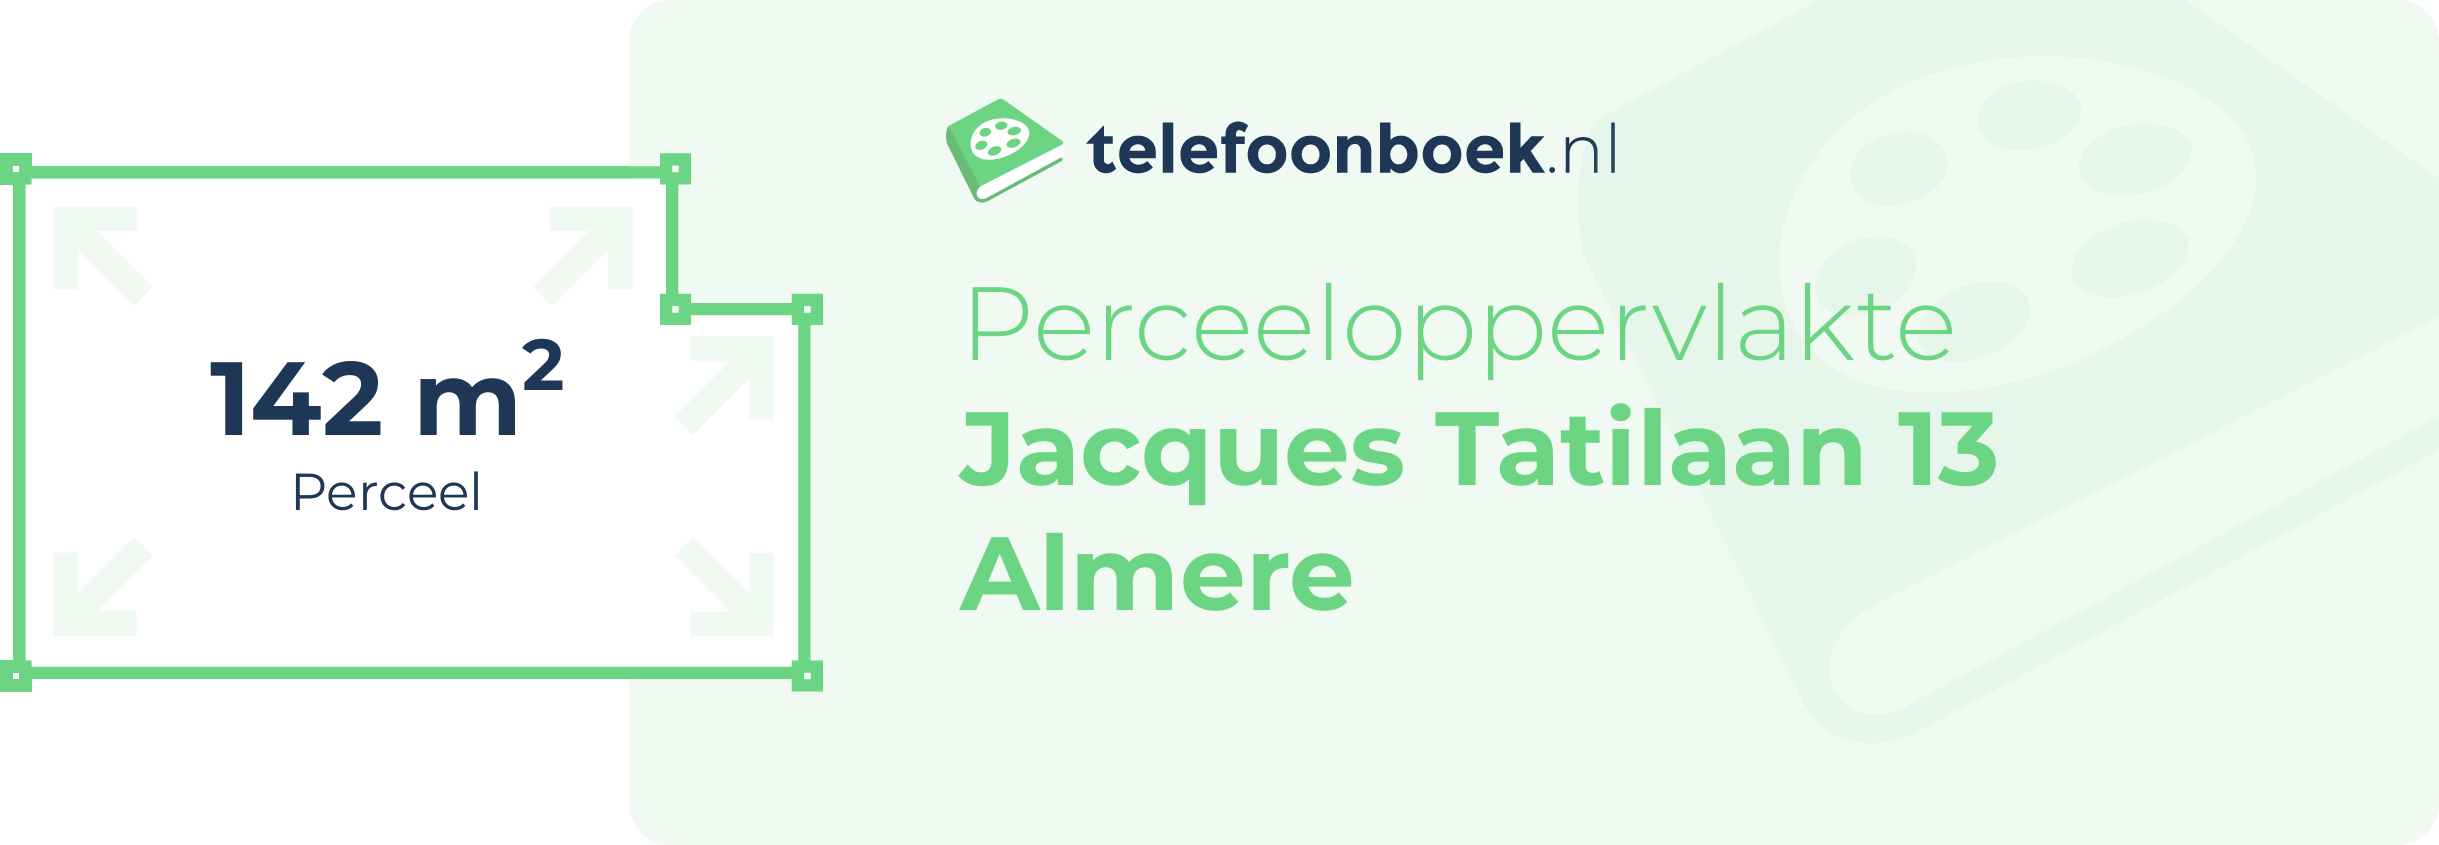 Perceeloppervlakte Jacques Tatilaan 13 Almere